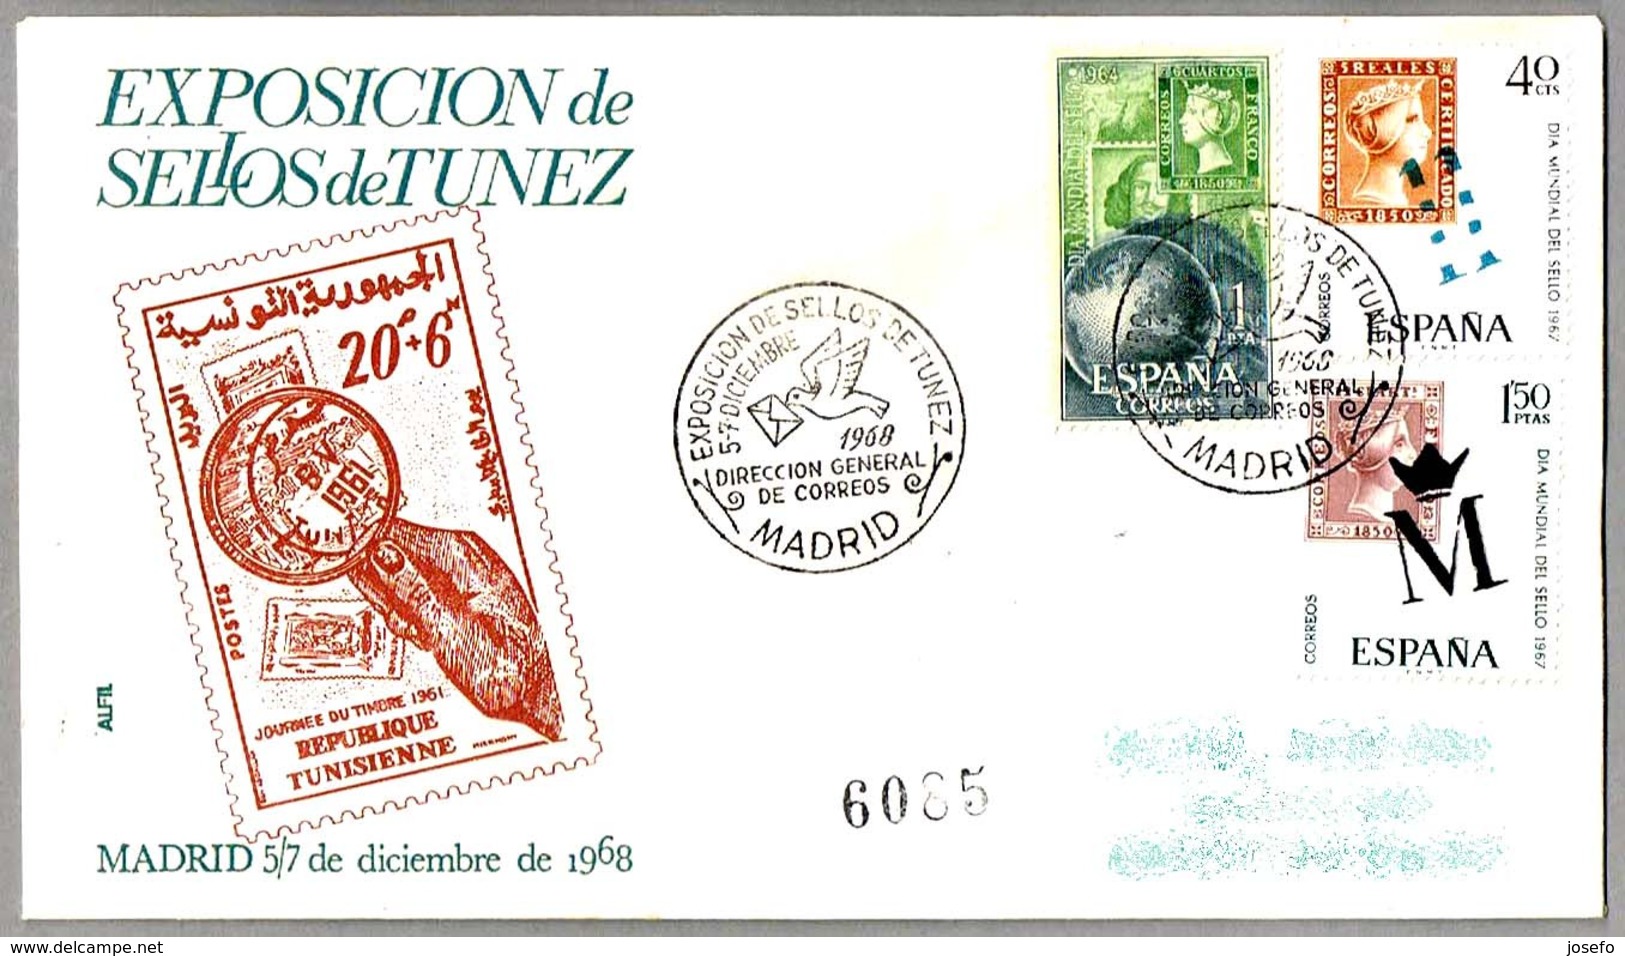 Exposicion De SELLOS DE TUNEZ - Exhibition STAMPS OF TUNISIA. Madrid 1968 - Philatelic Exhibitions